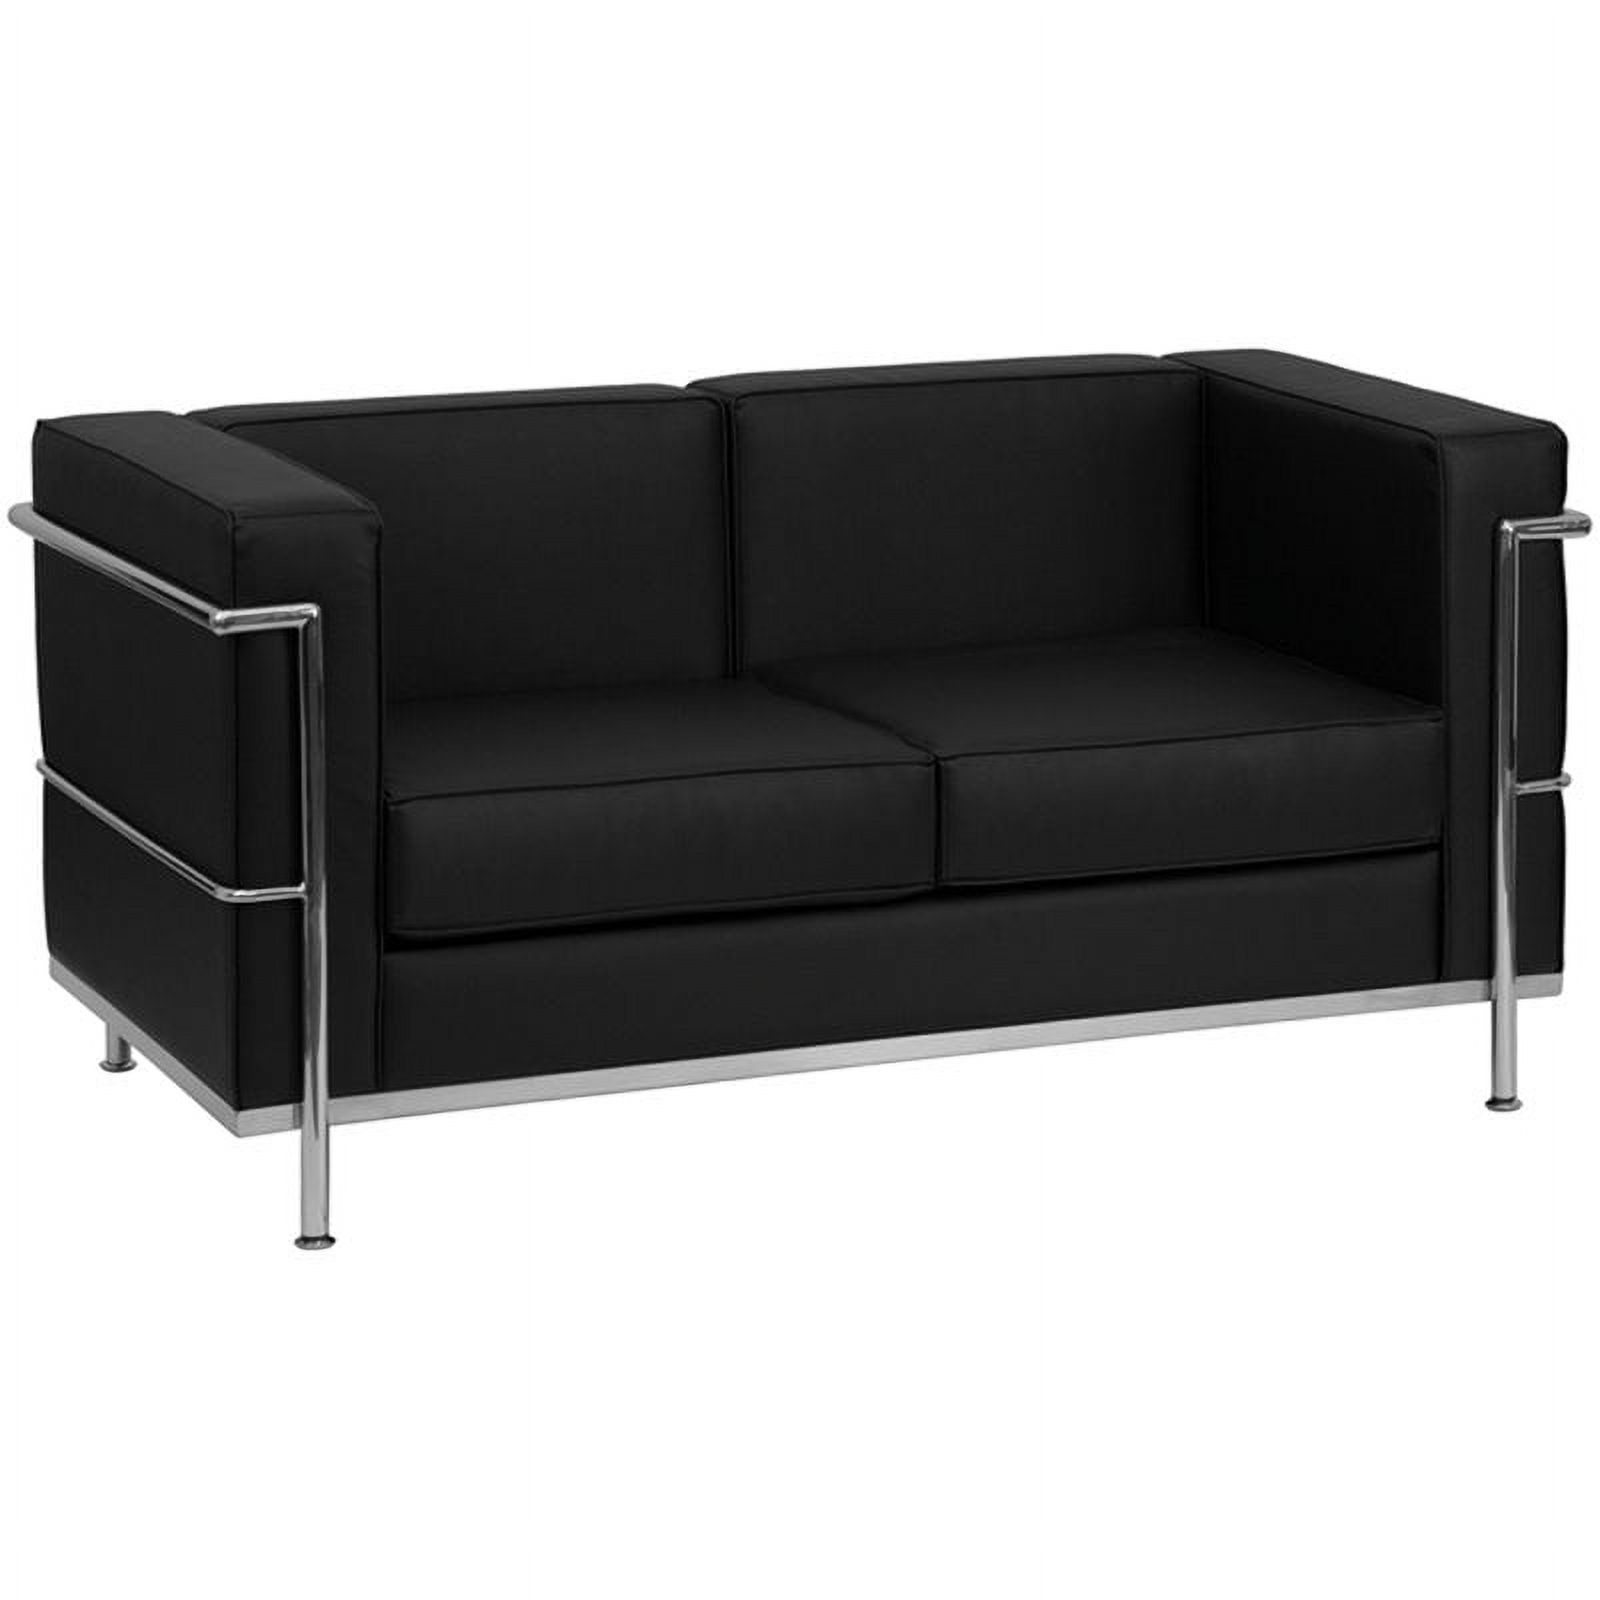 Flash Furniture Hercules Regal Series Reception Set in Black - image 3 of 5